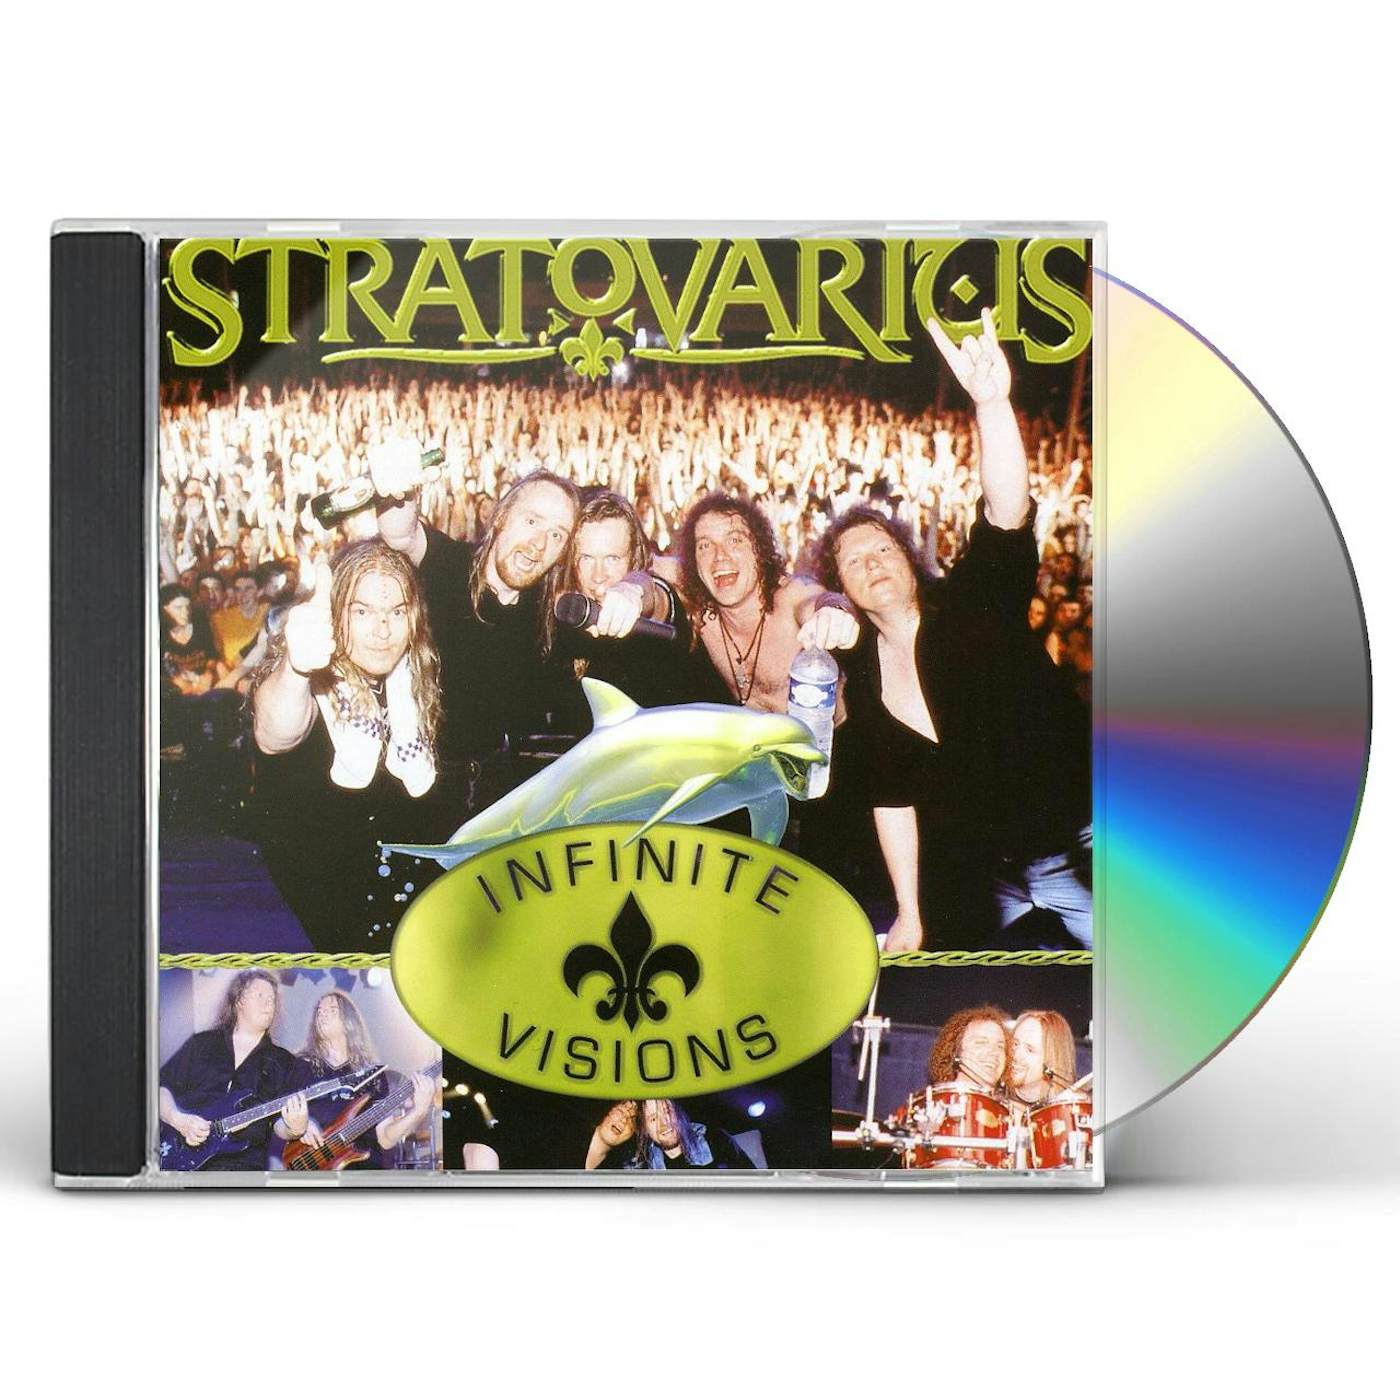 Stratovarius - Visions, Releases